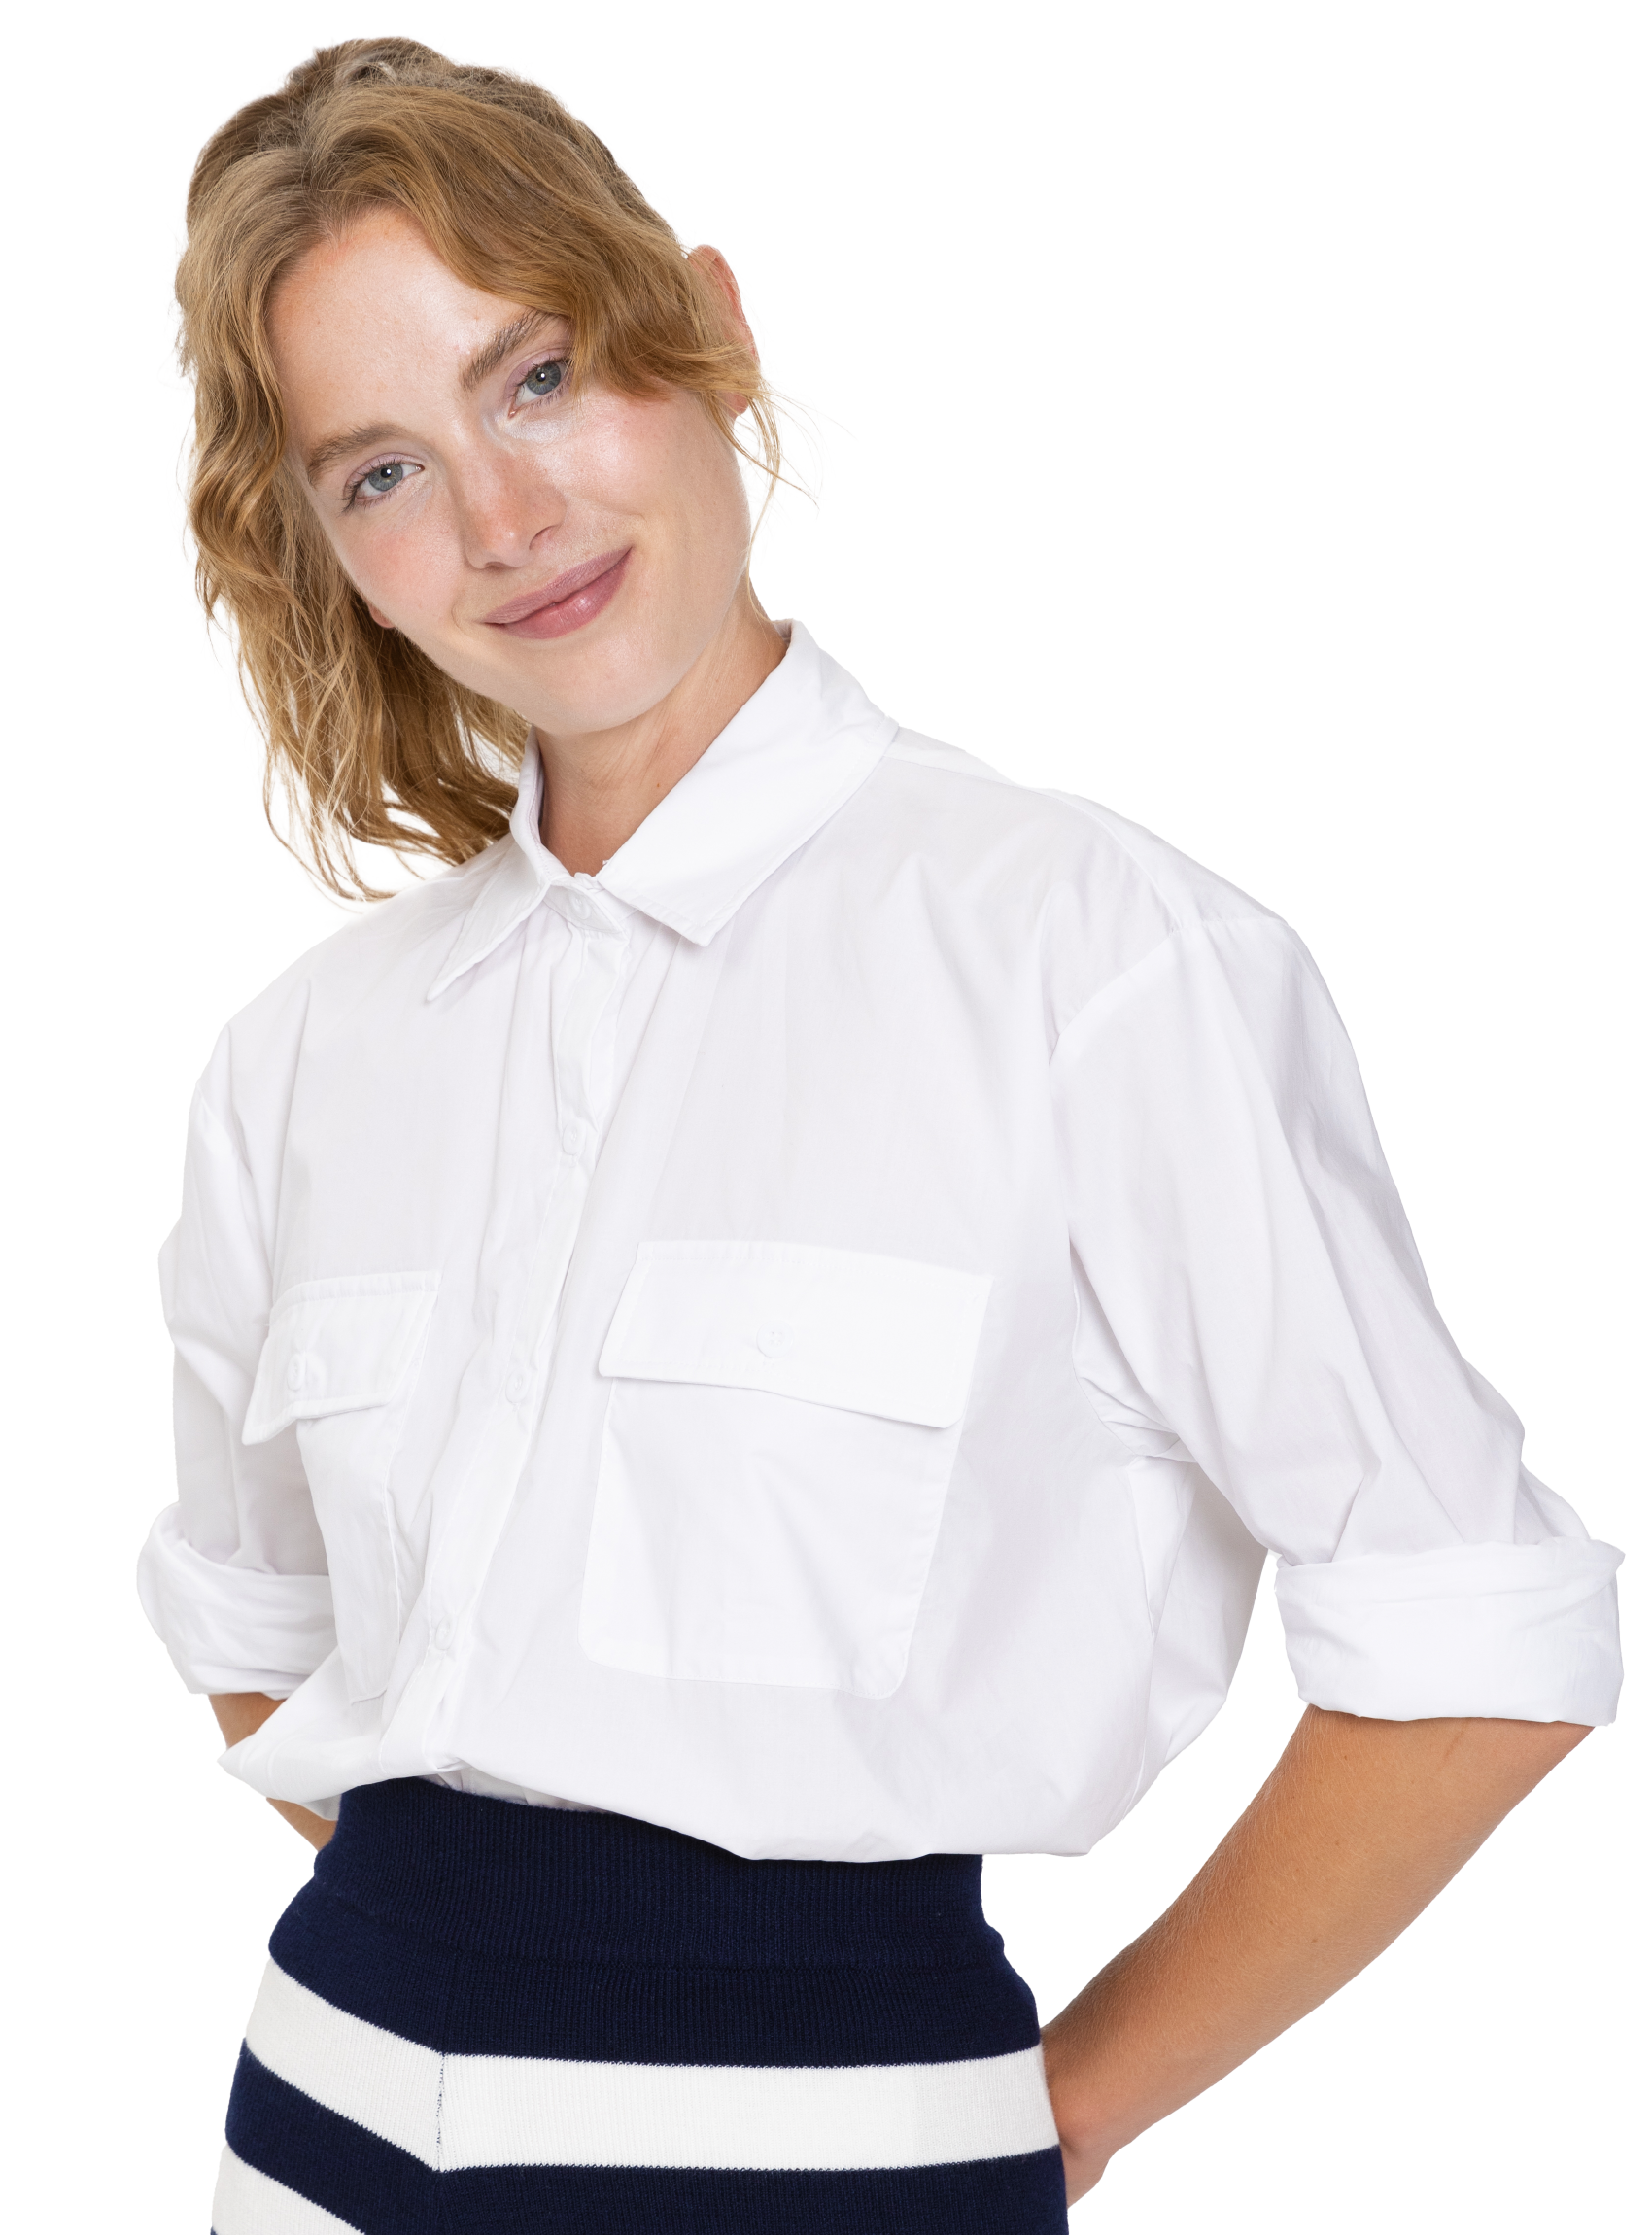 Nuzzle Clothing Shirts & Tops Crisp White Buttondown